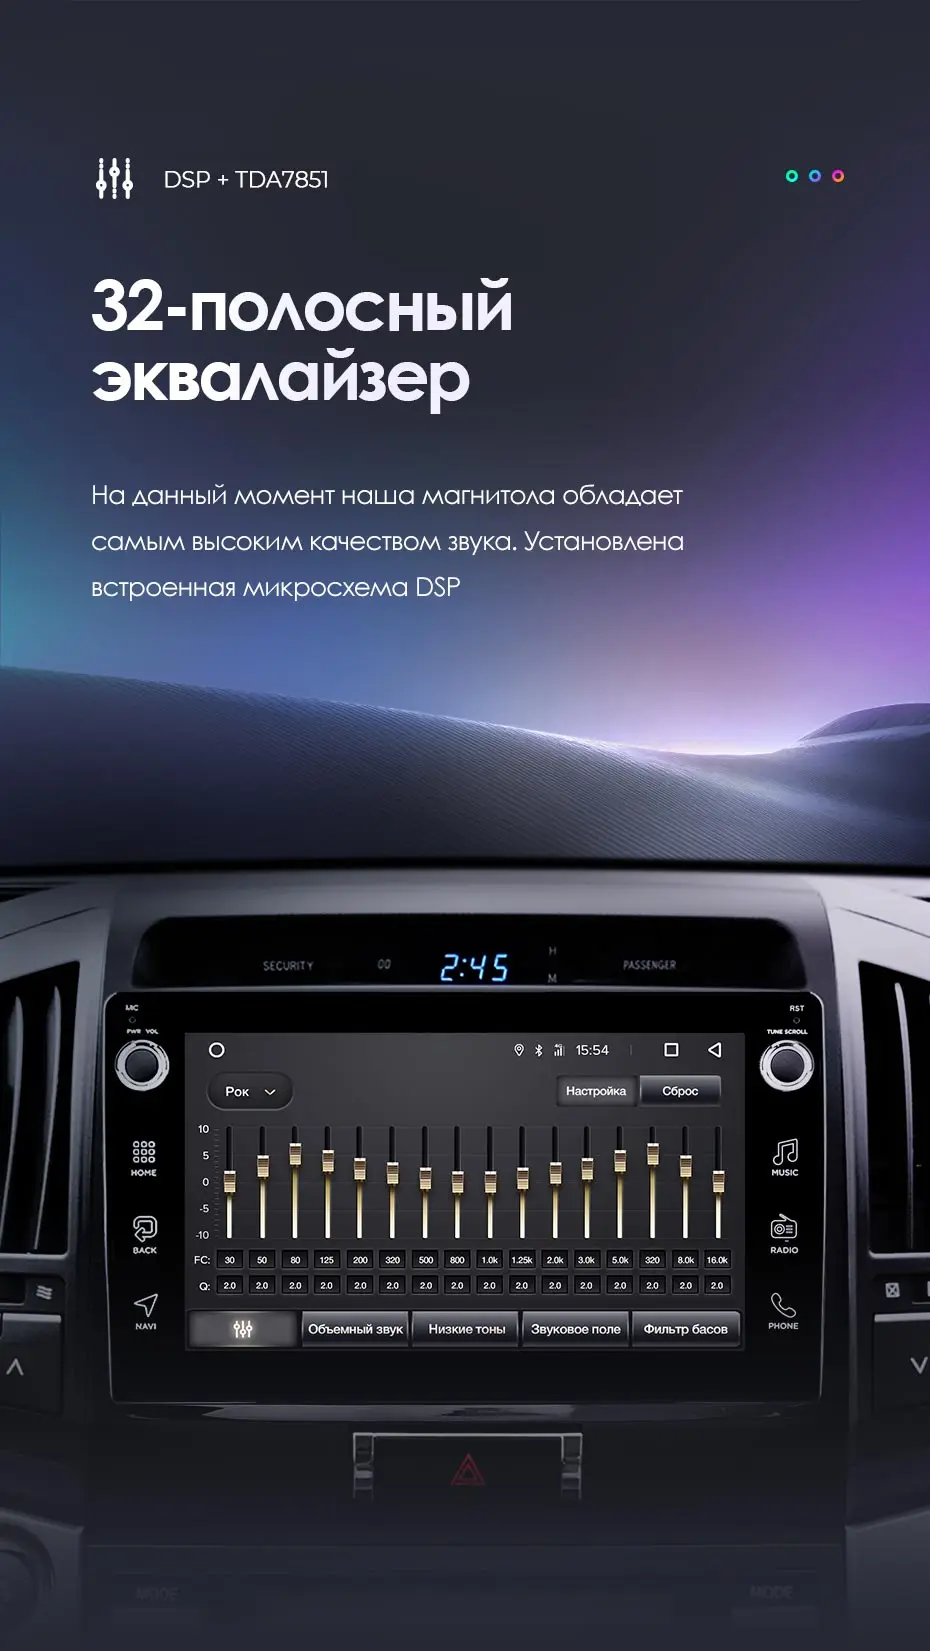 TEYES SPRO Штатная магнитола для Тойота Ленд Крузер 11 200 Toyota Land Cruiser 11 200 2007- Android 8.1, до 8-ЯДЕР, до 4+ 64ГБ 32EQ+ DSP 2DIN автомагнитола 2 DIN DVD GPS мультимедиа автомобиля головное устройство